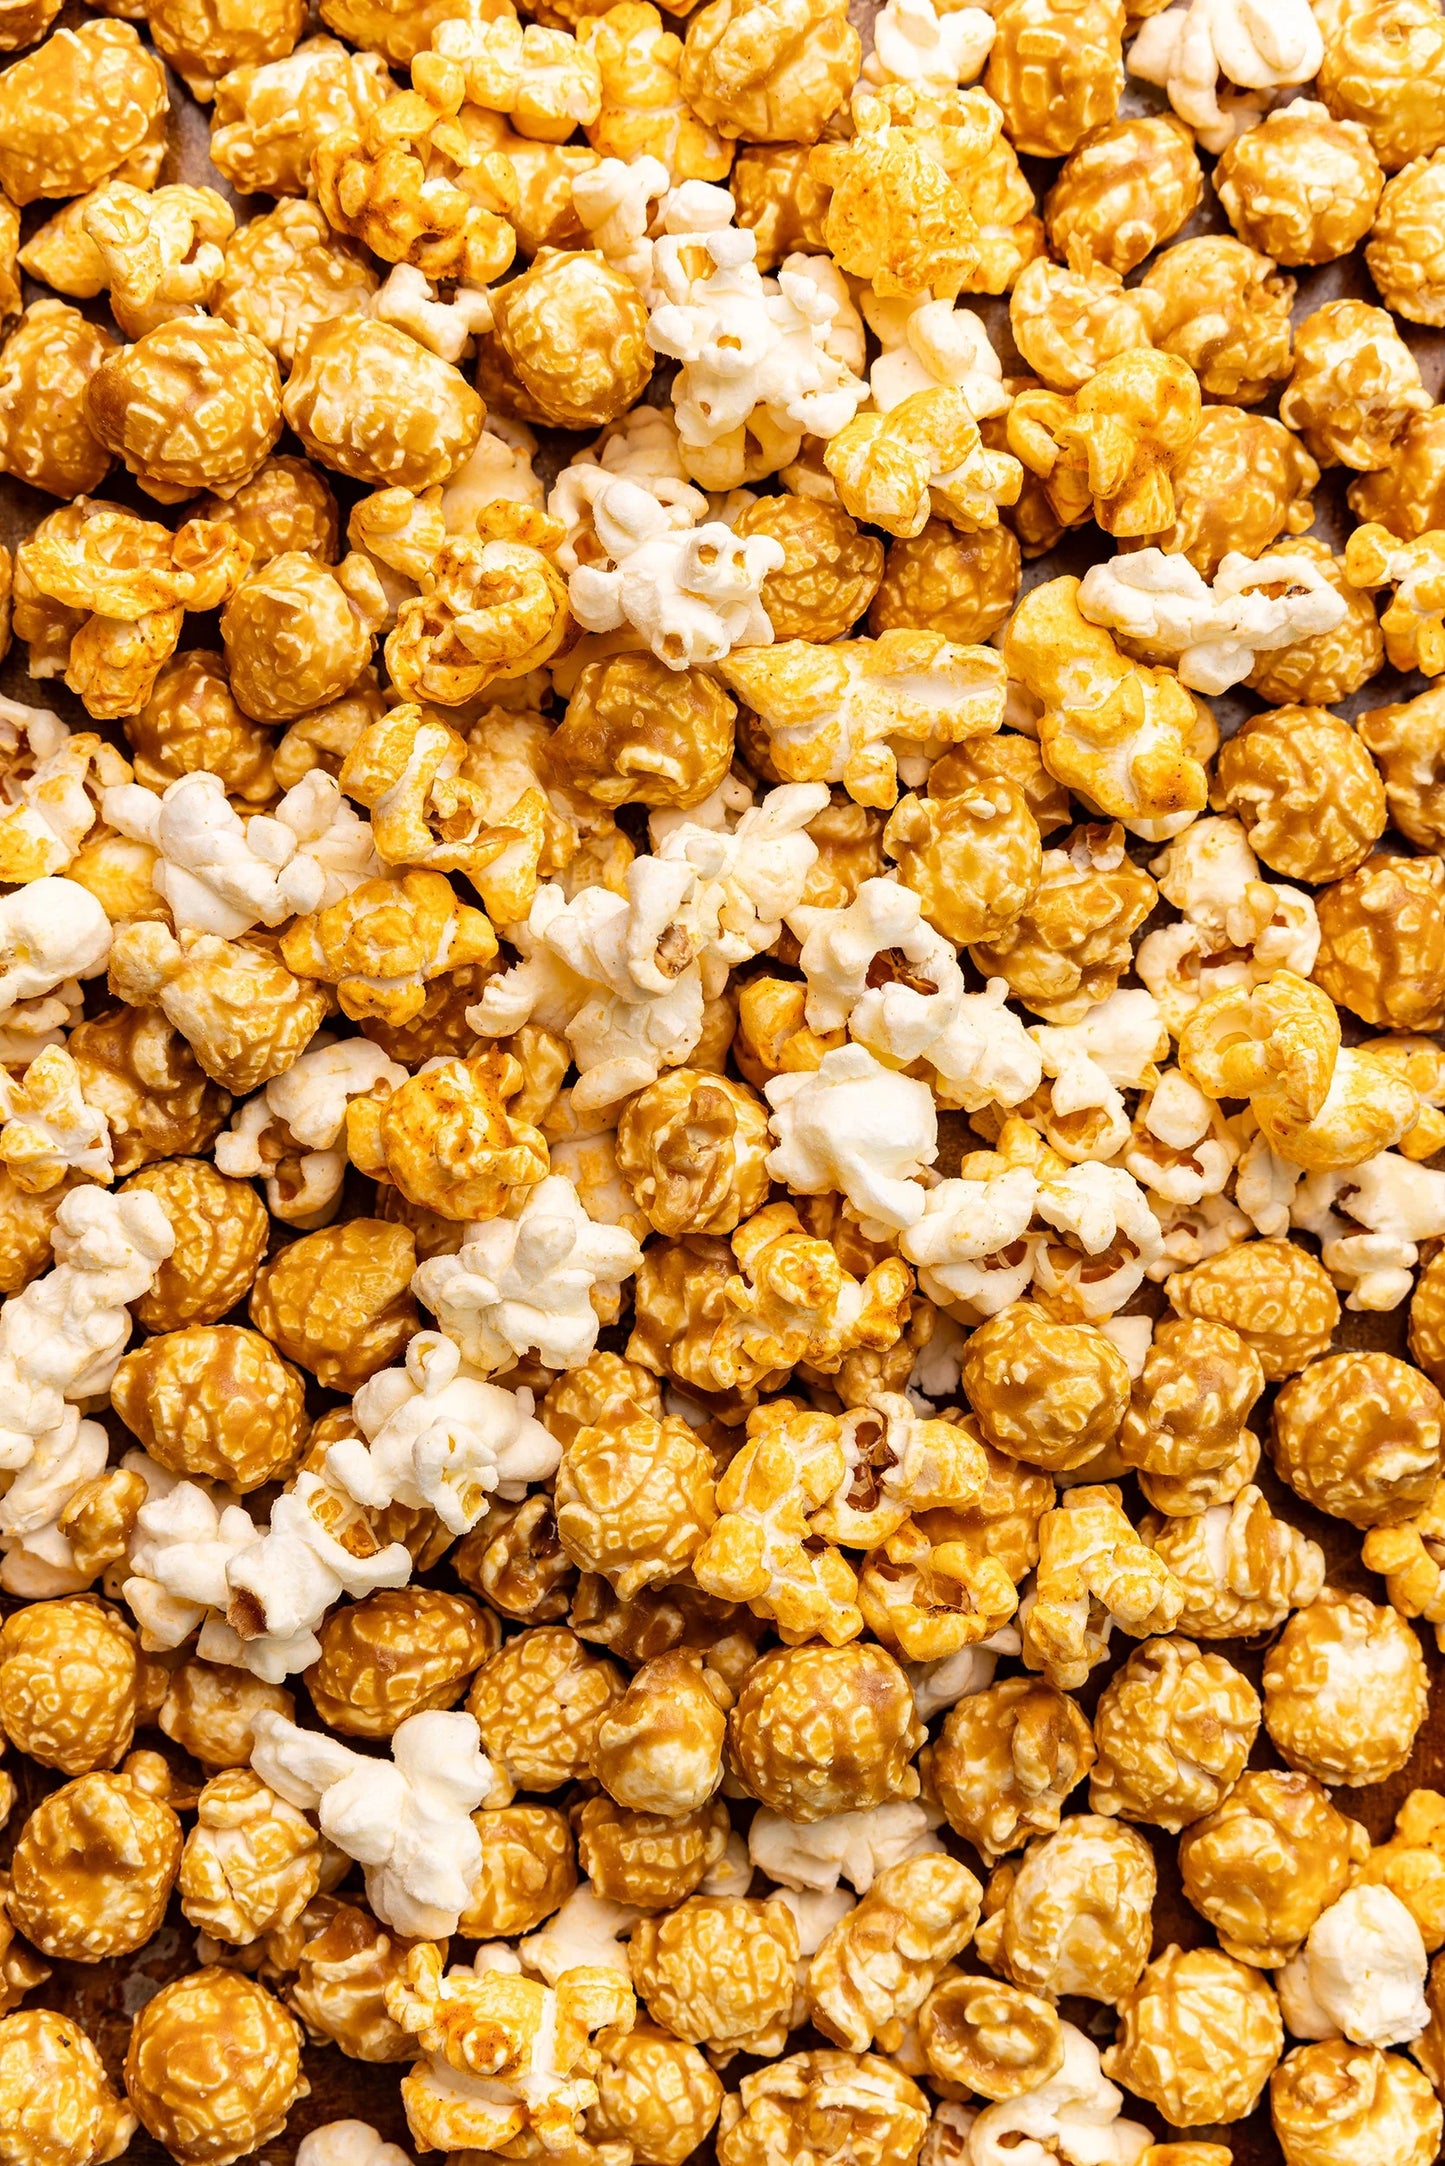 Hand-crafted Popcorn, Poppy Mix (Carmel & Jalapeño Cheddar)